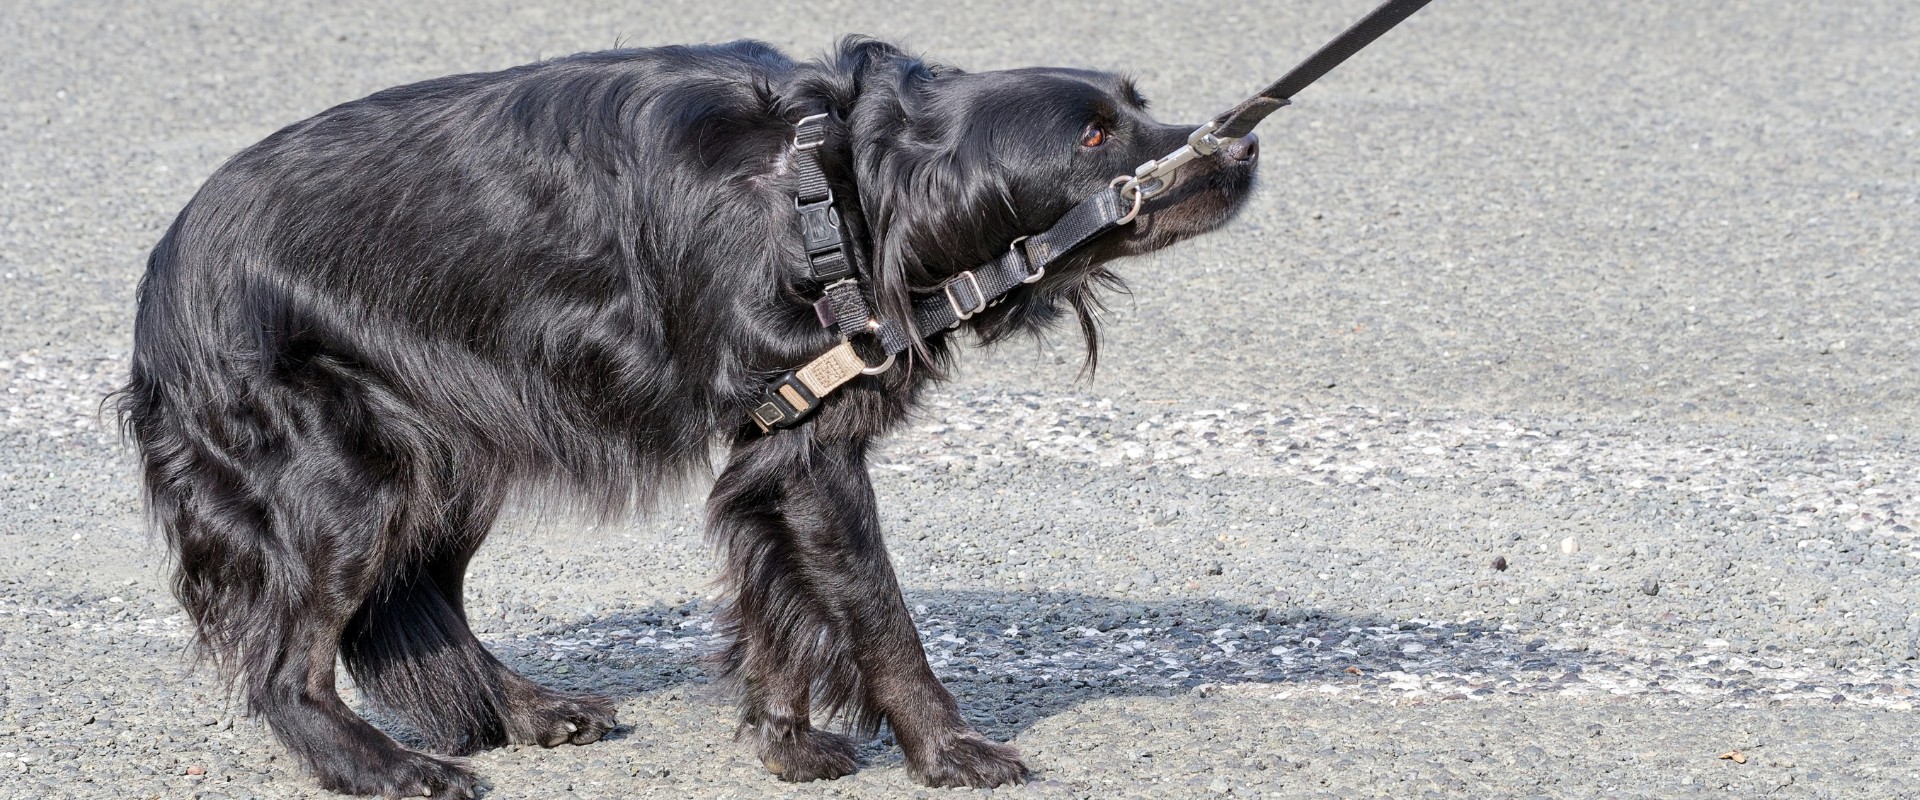 how to leash train a dog that won't walk